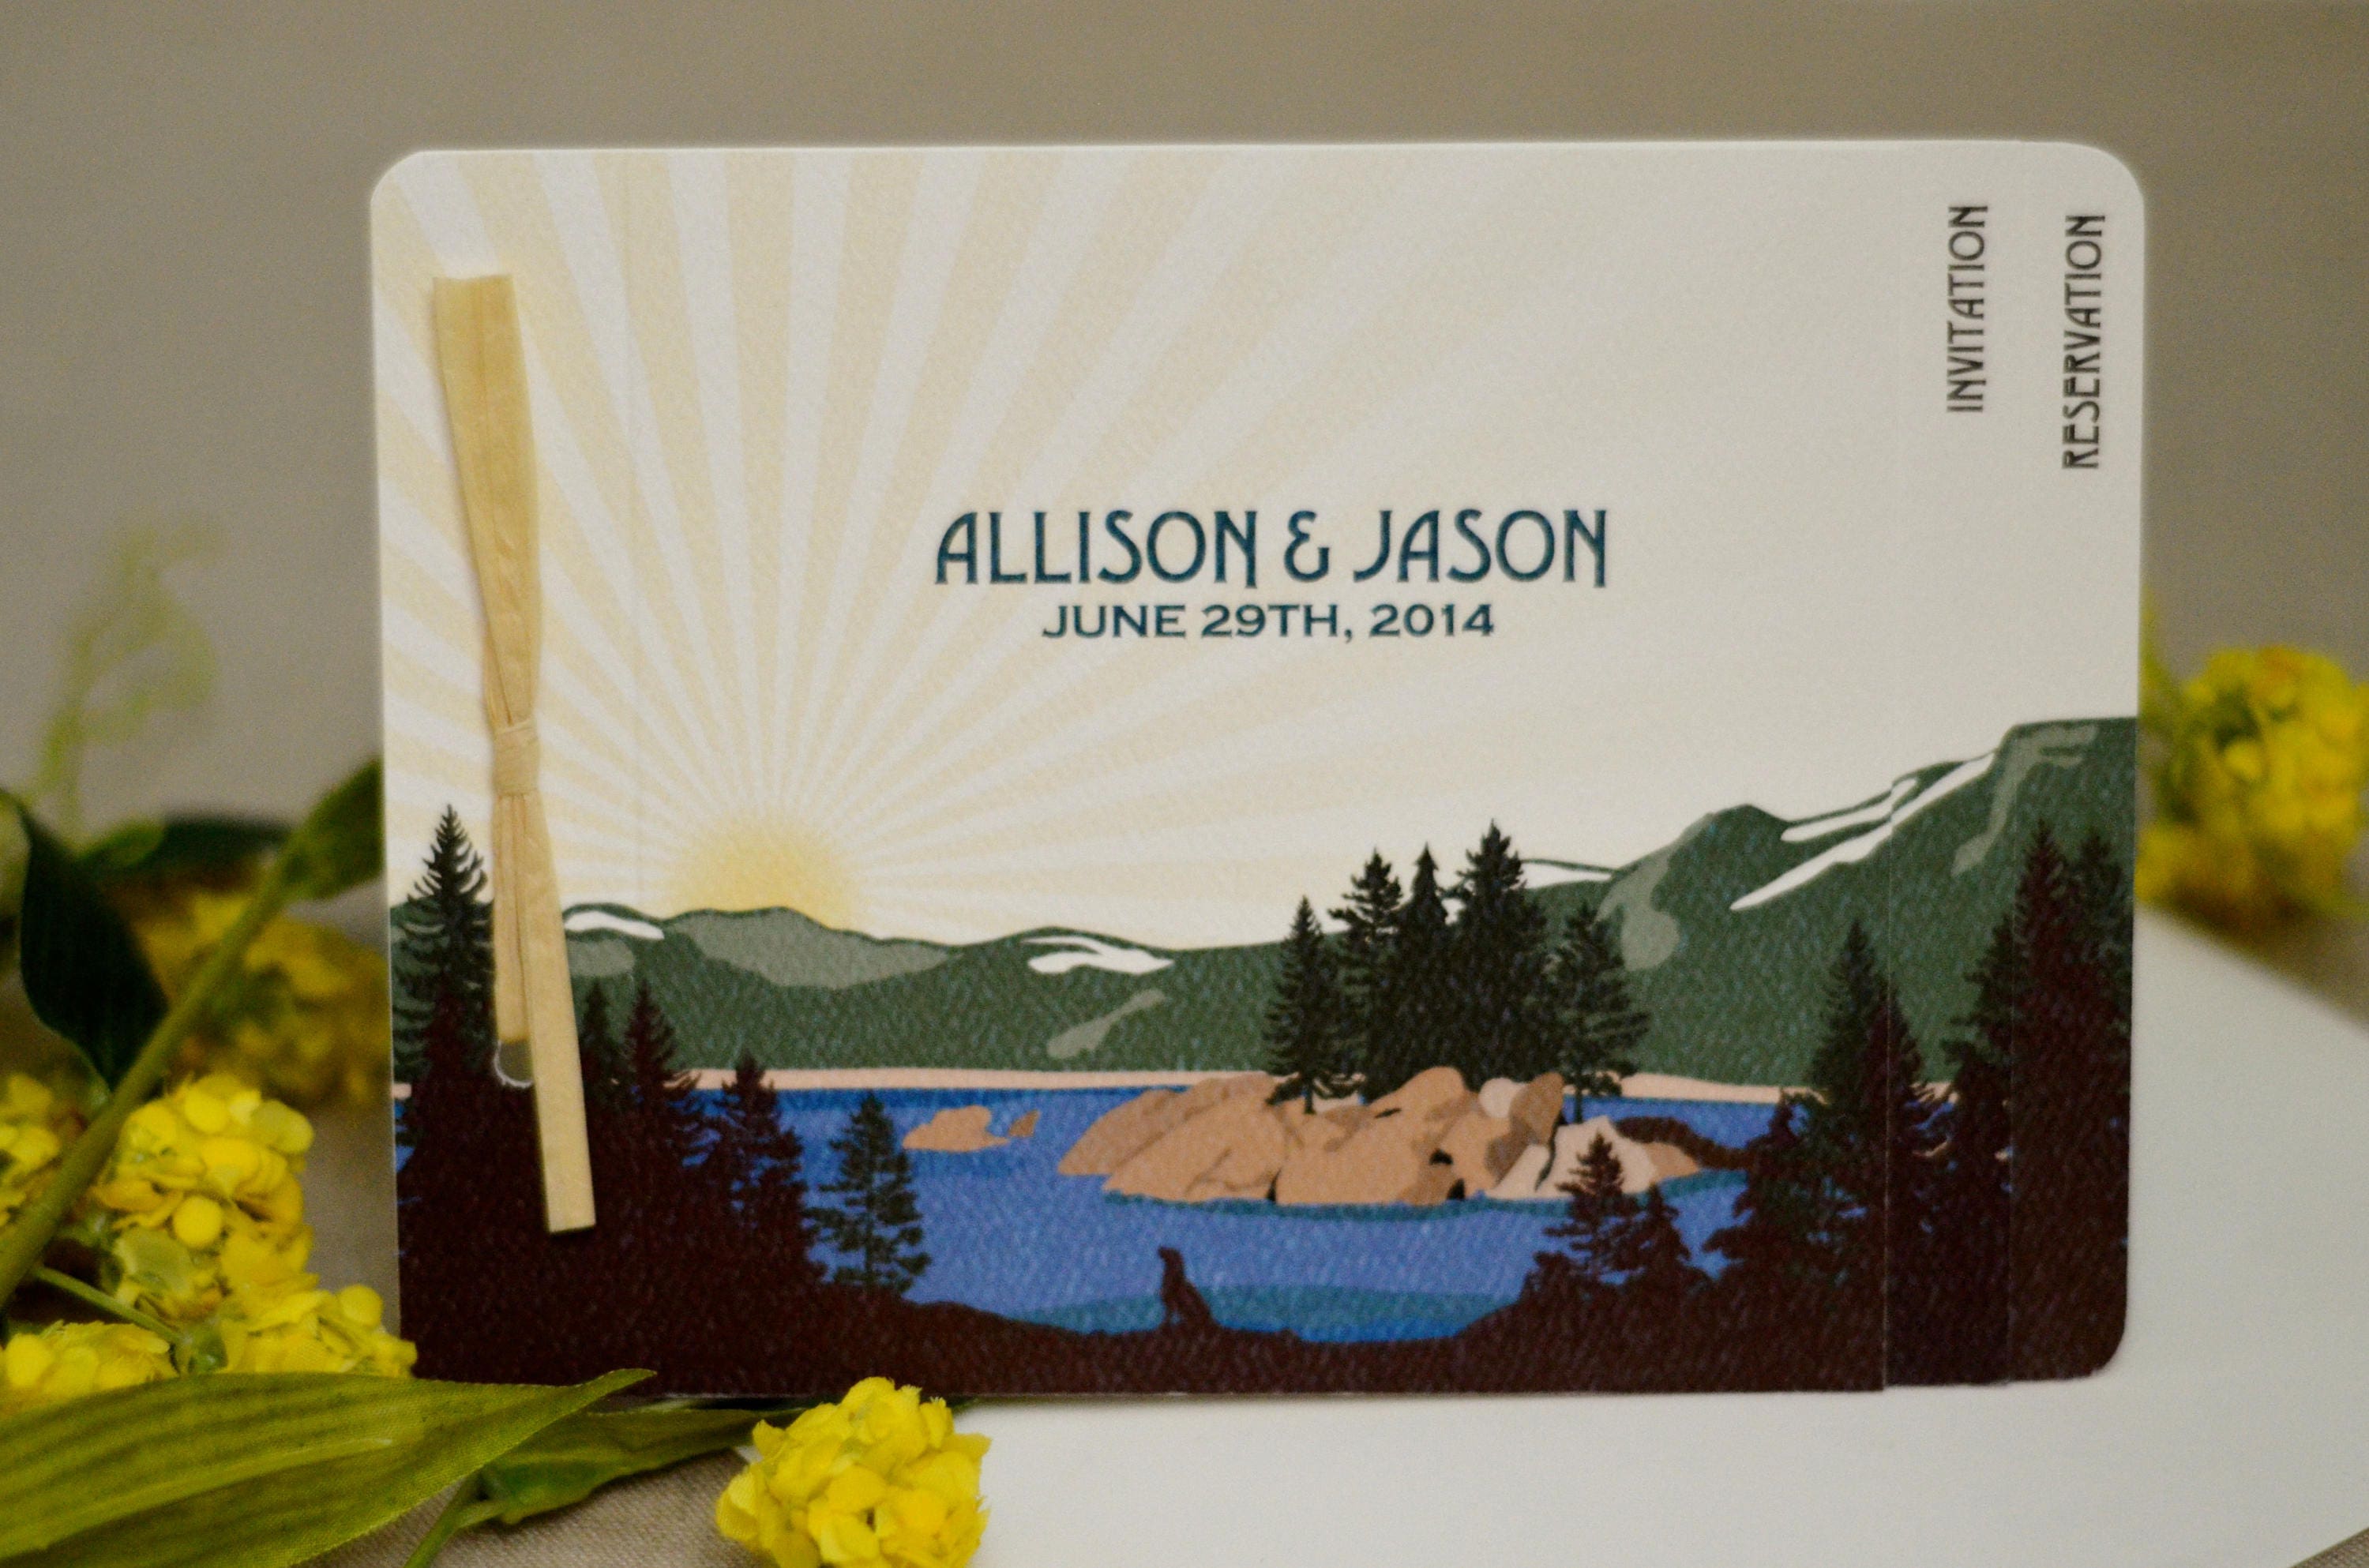 Lake Tahoe Mountain Landscape with Fannette Island Sunrise //3pg Livret Wedding Invitation Booklet Style with Postcard RSVP // BP1